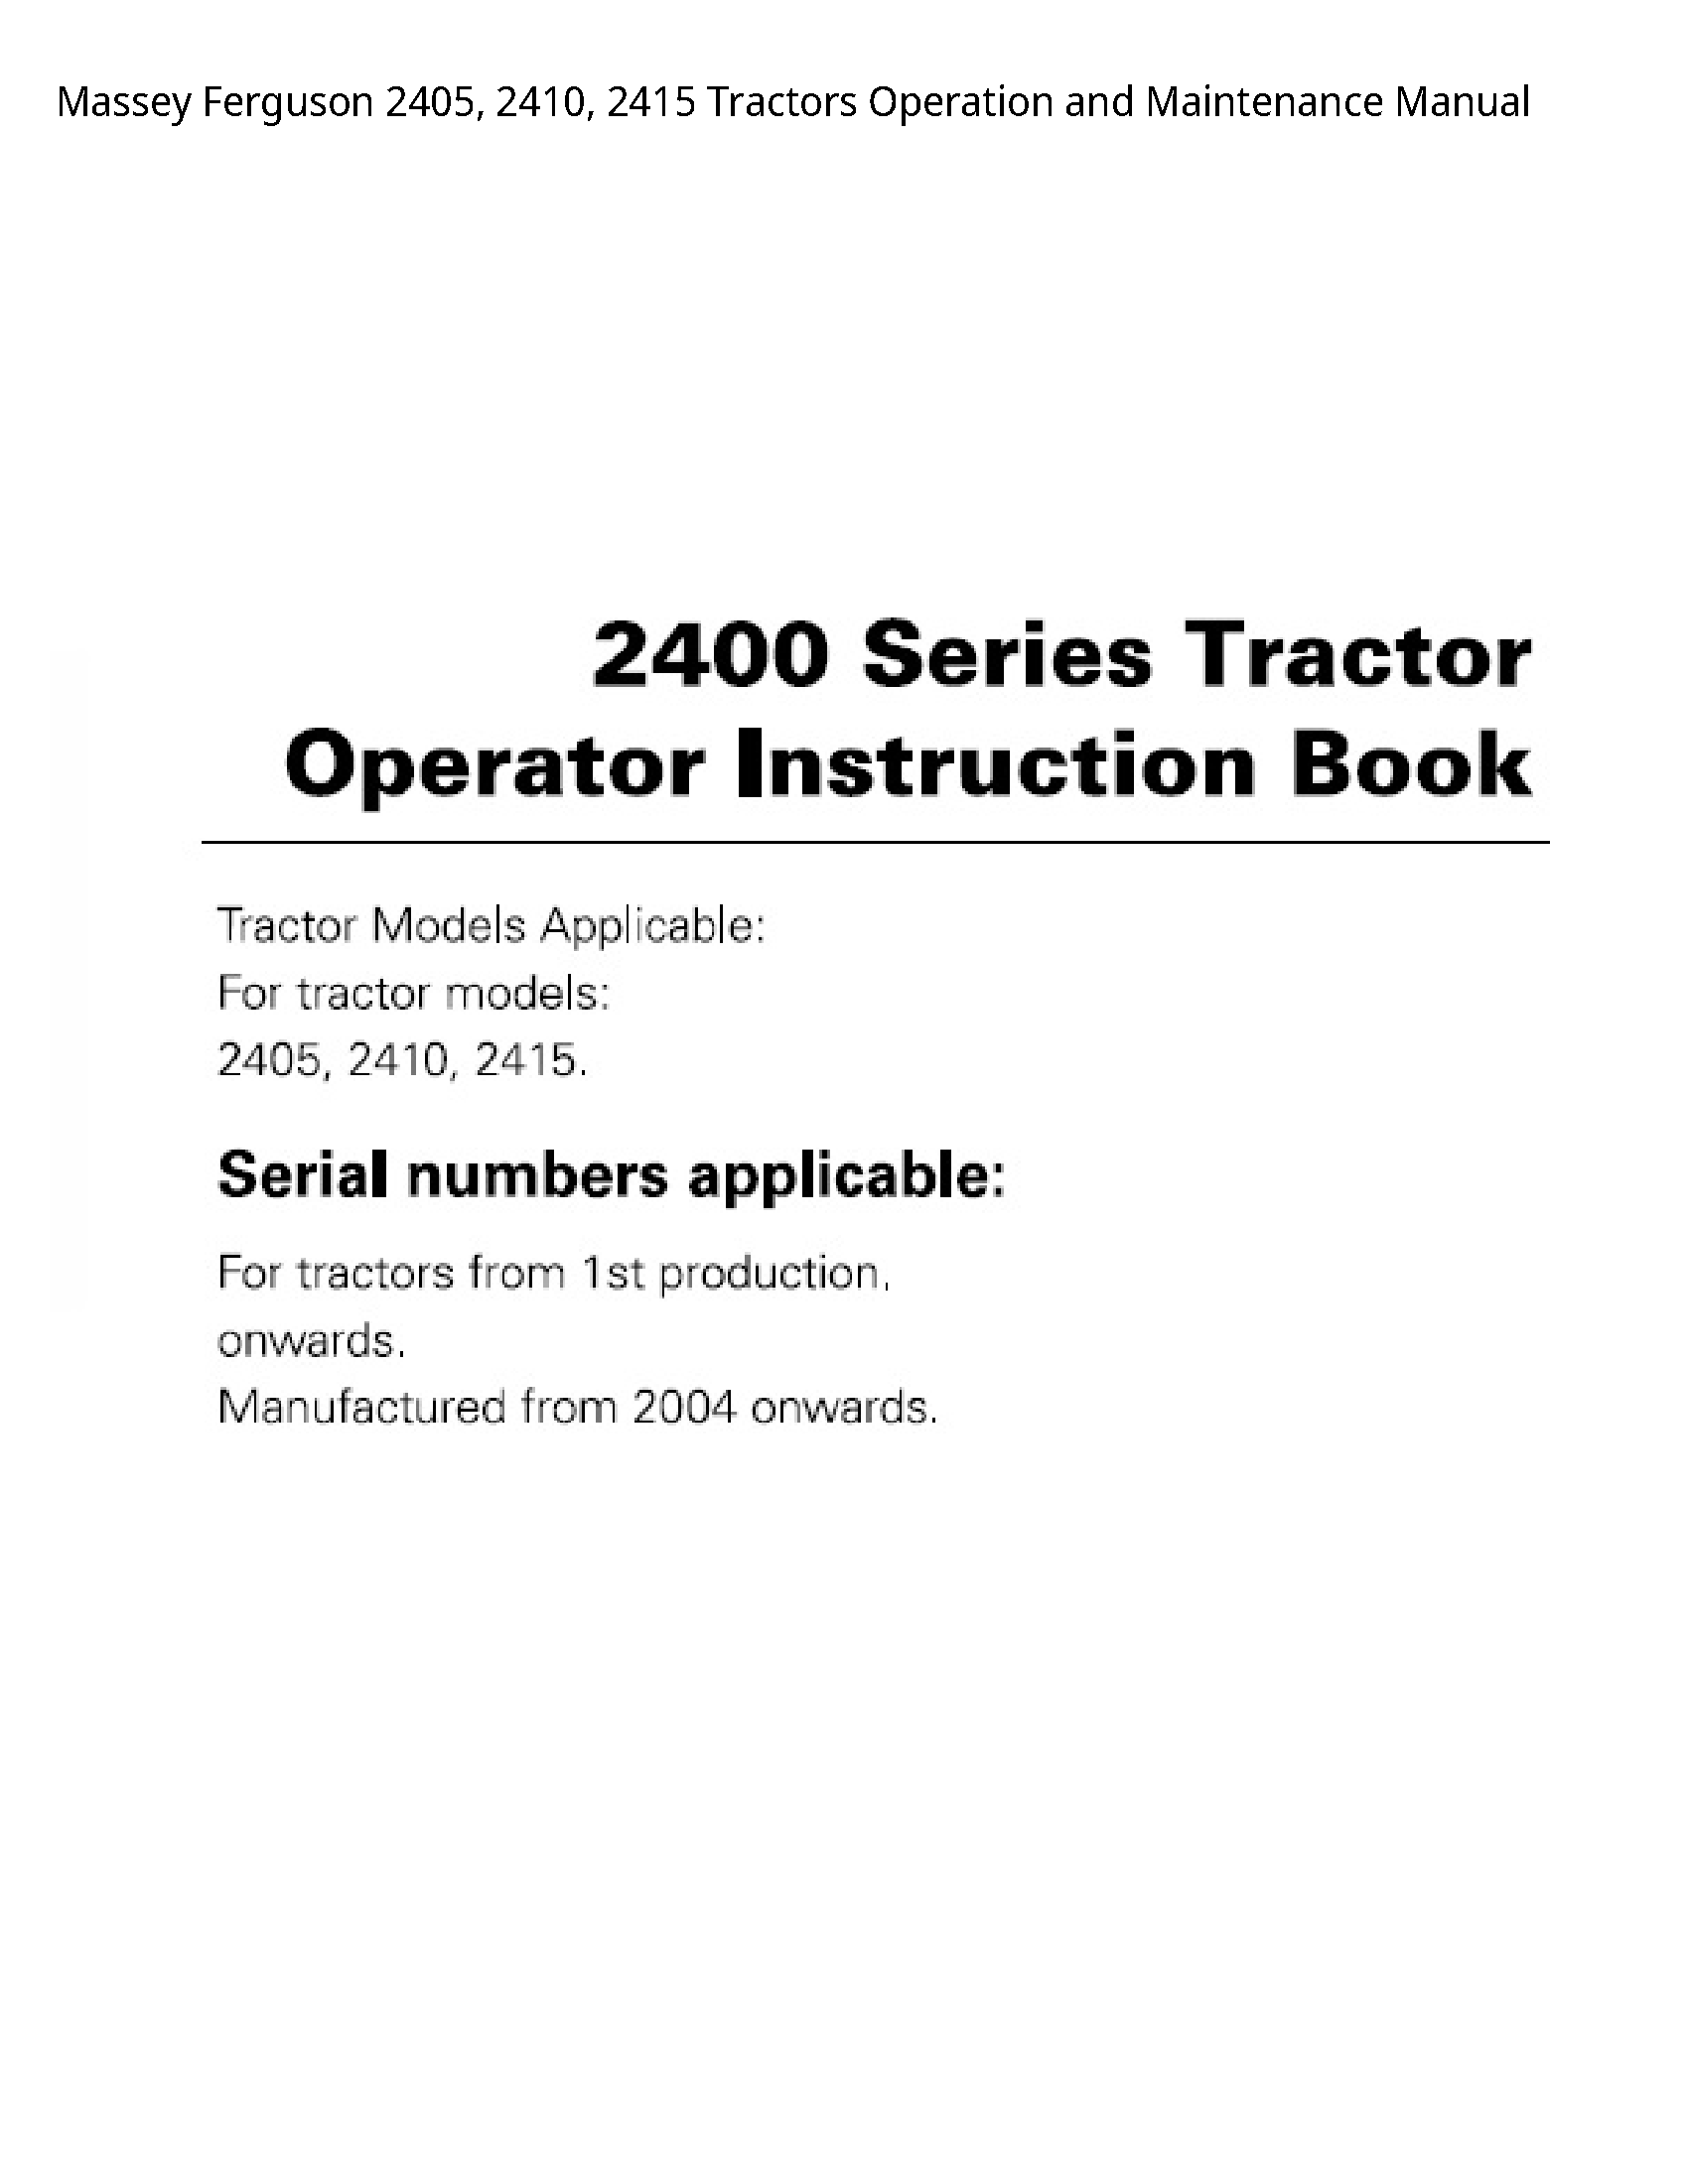 Massey Ferguson 2405 Tractors Operation  Maintenance manual